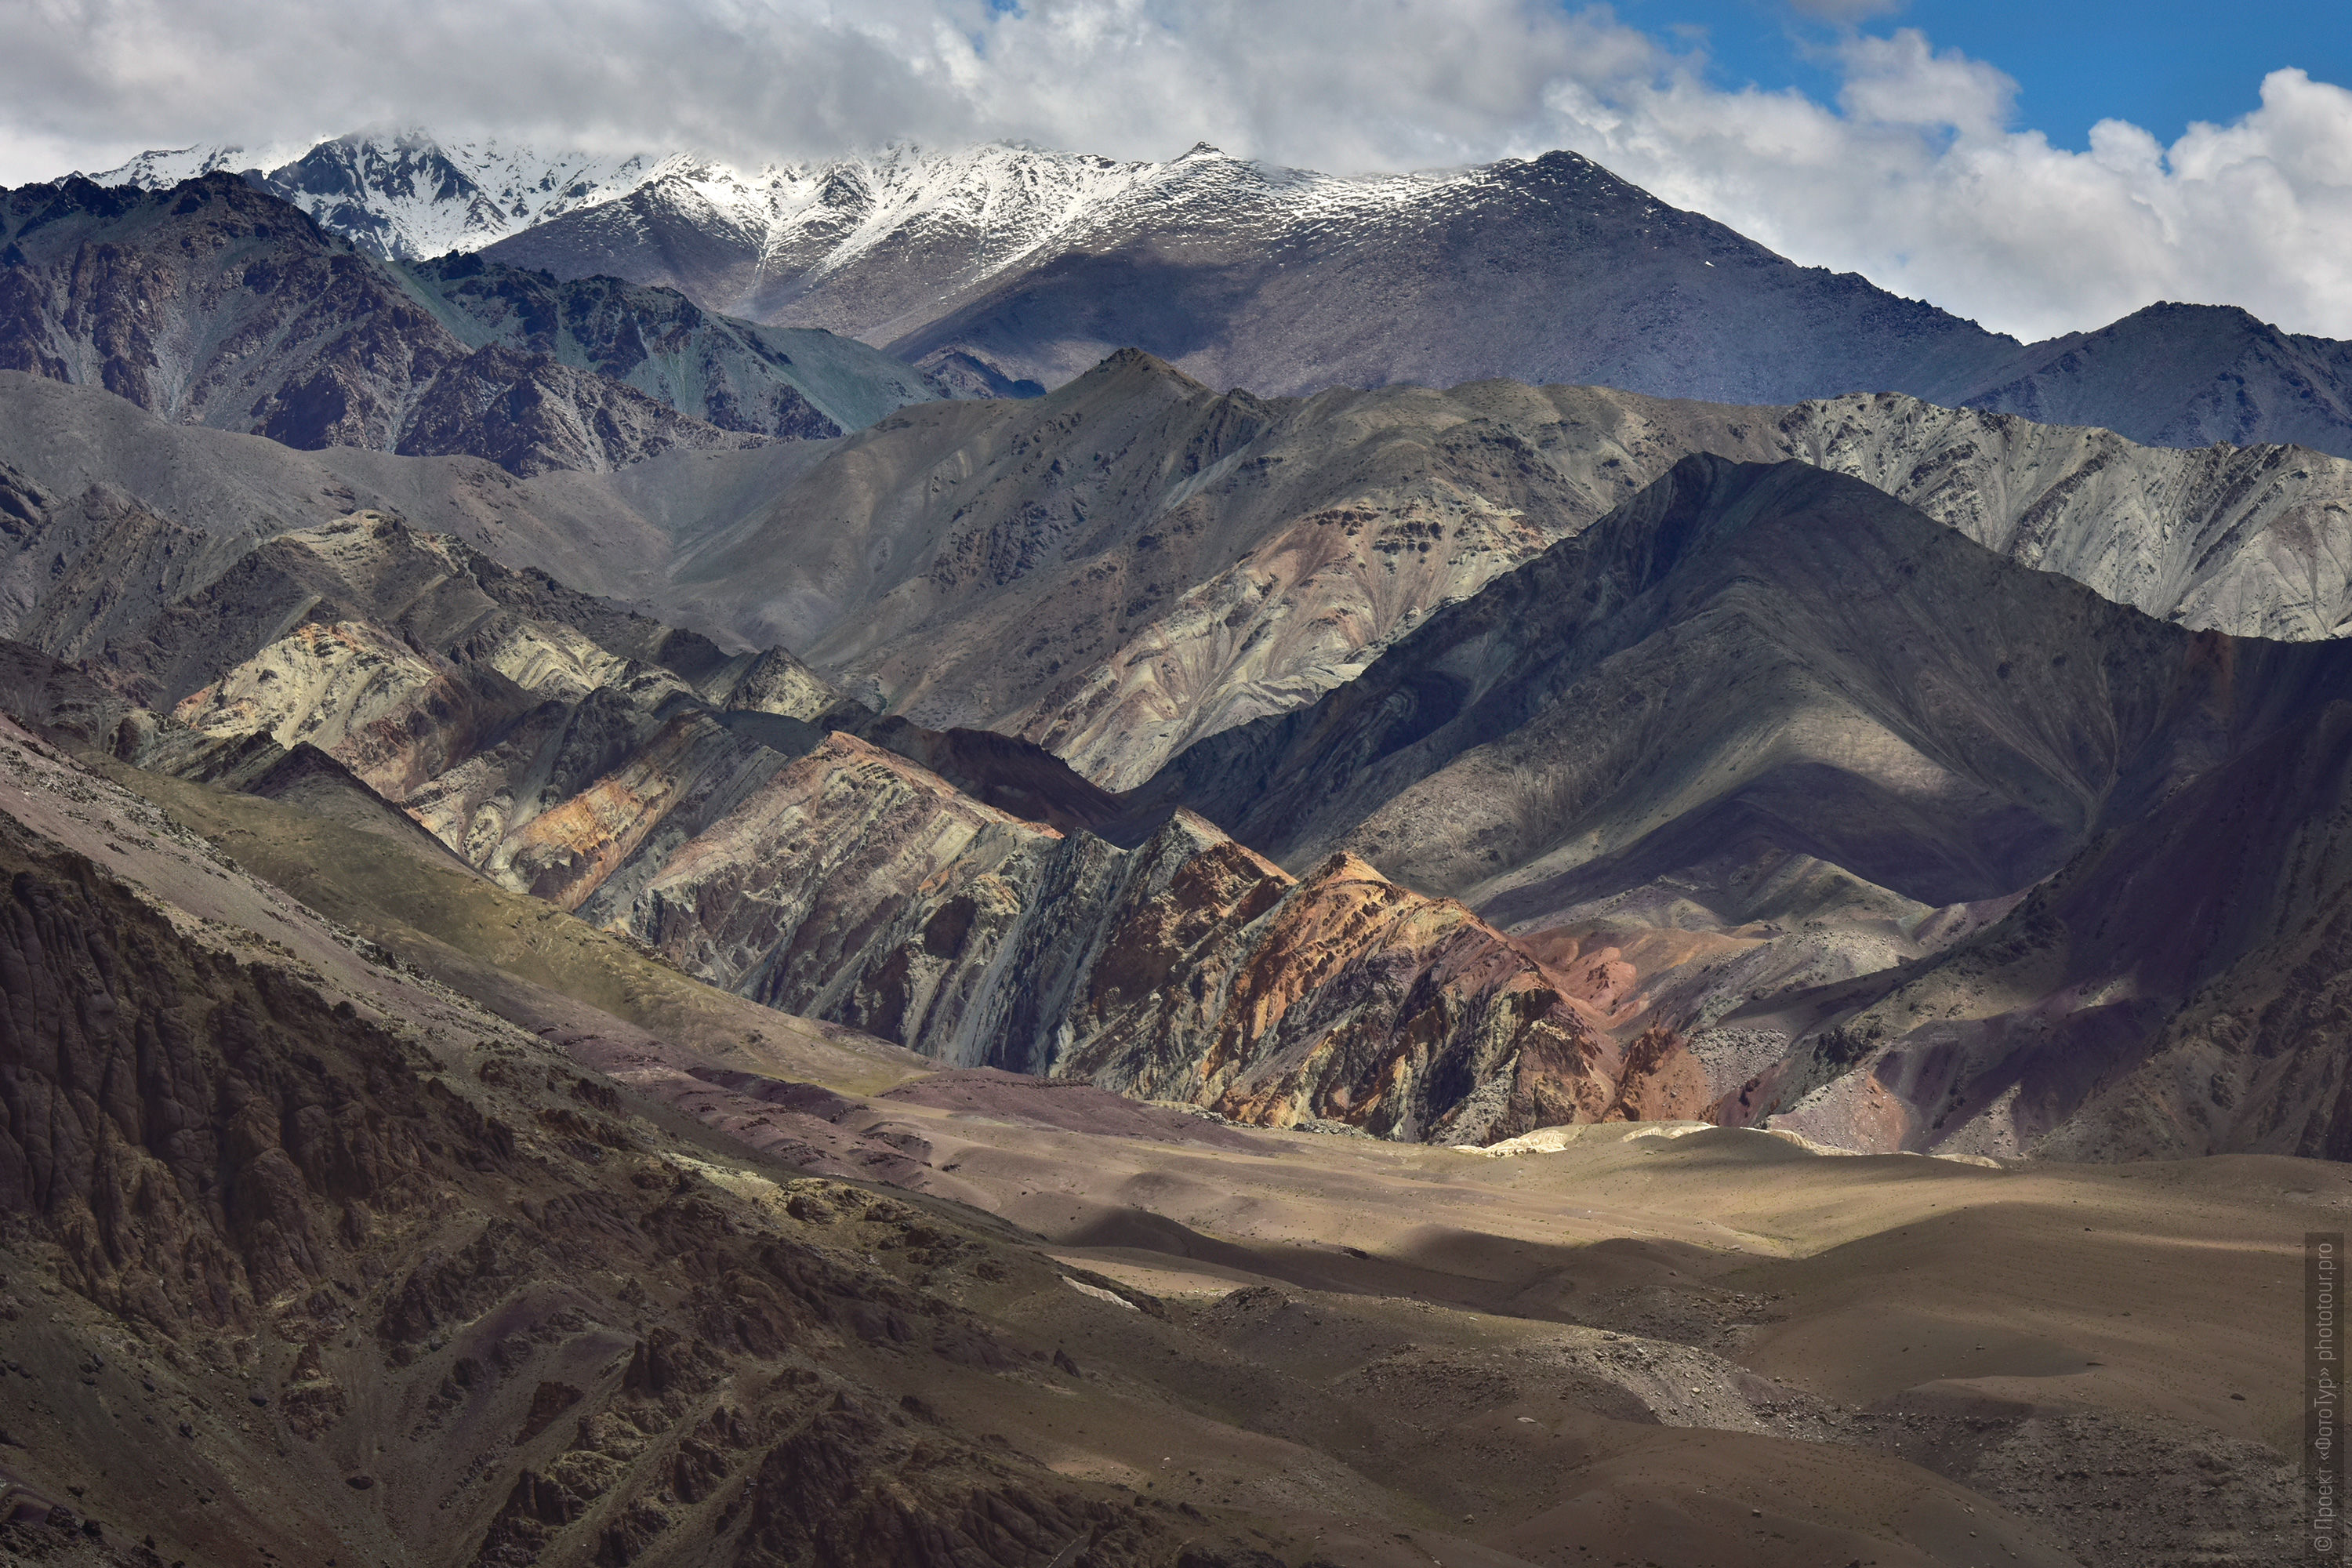 Color Mountains, Ladakh. Photo tour to Tibet for the Winter Mysteries in Ladakh, Stok and Matho monasteries, 01.03. - 03/10/2020